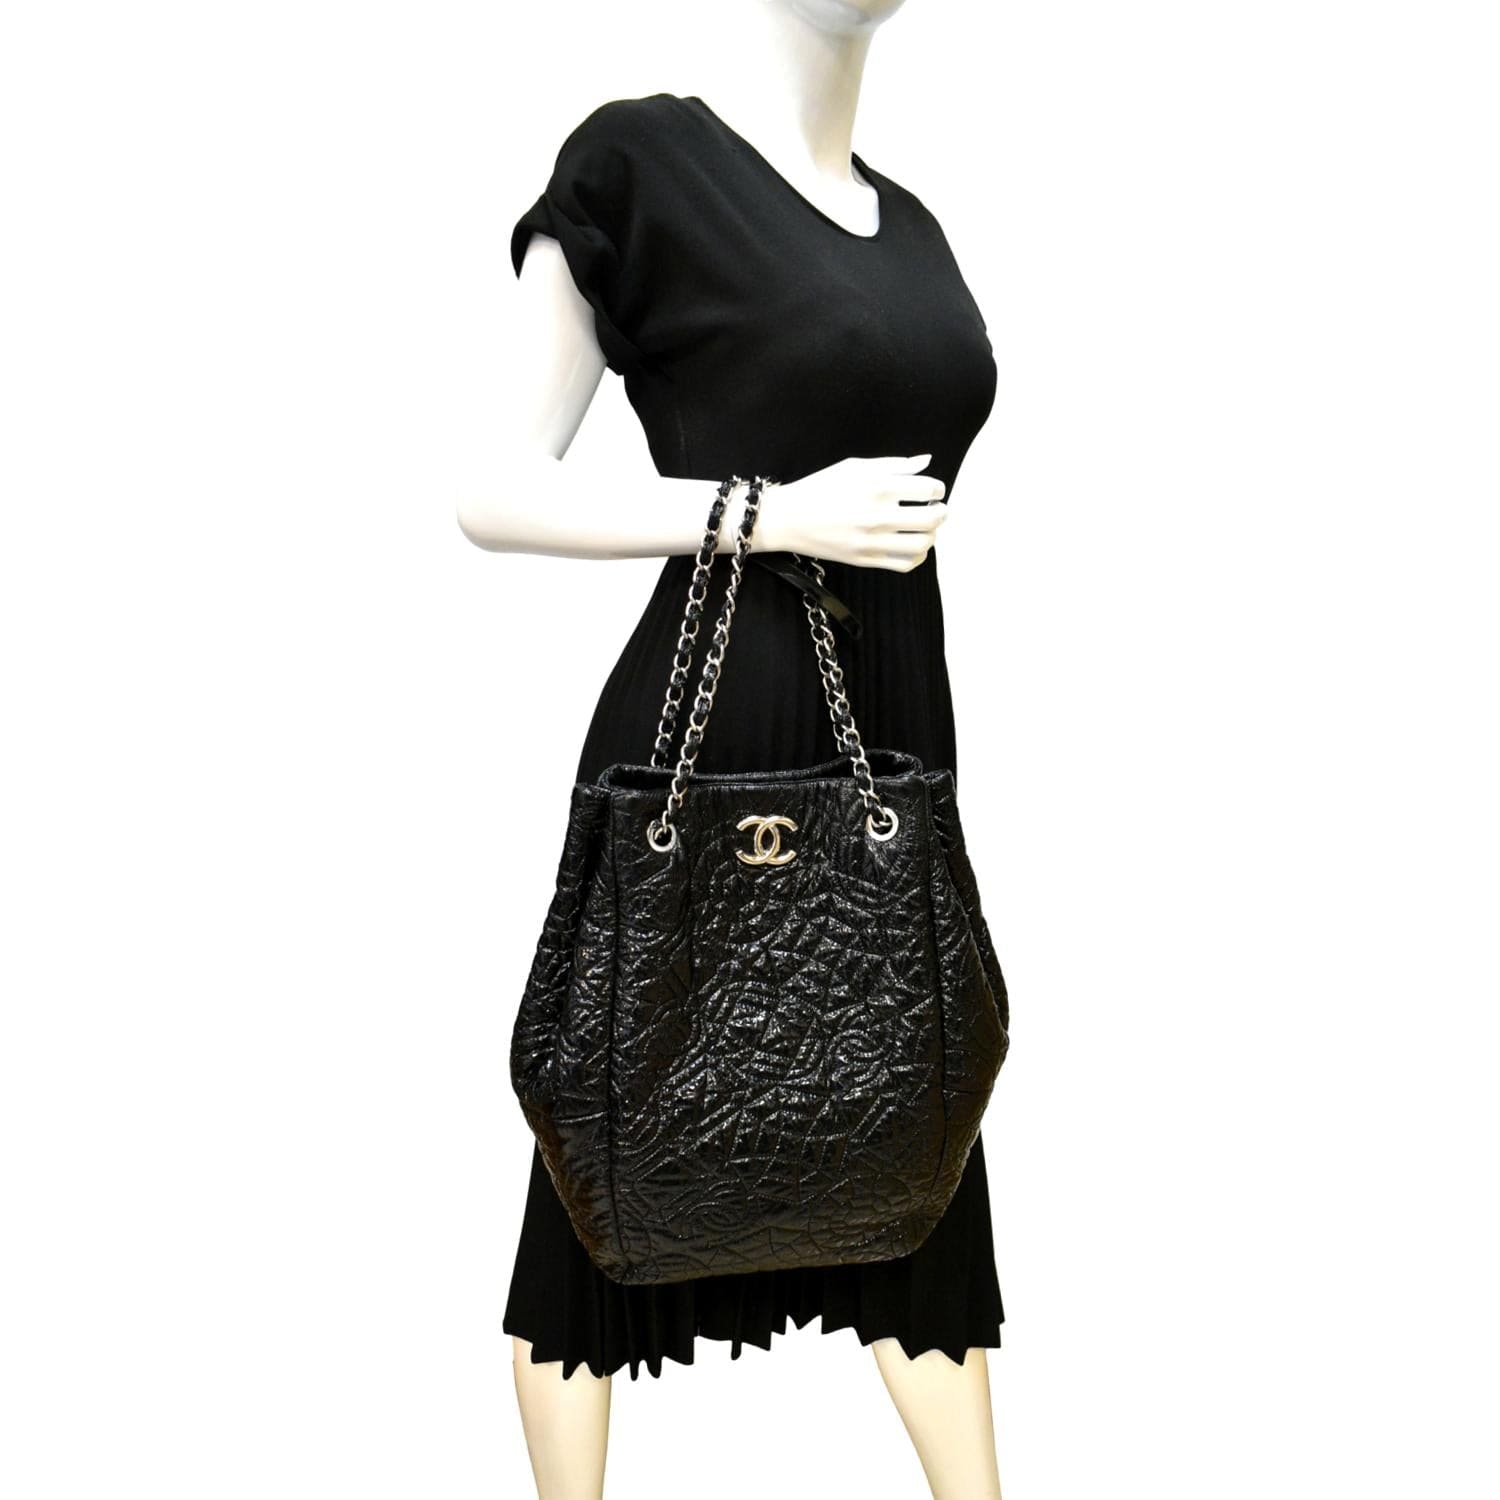 Chanel Camellia Handbag Raincoat Printed PVC - ShopStyle Clutches